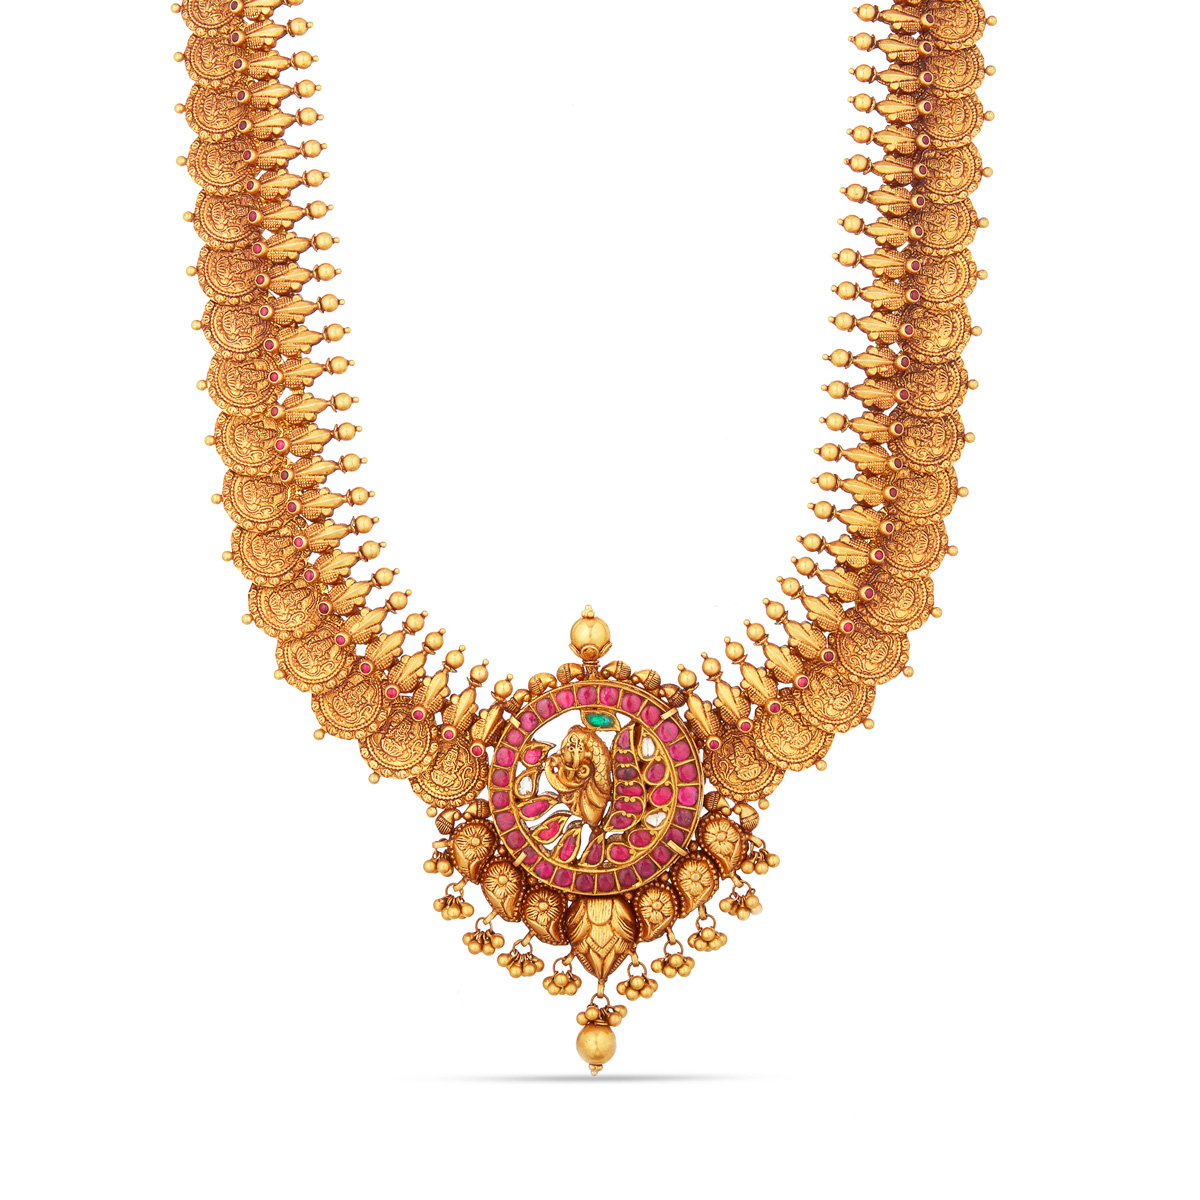 Elegance Lakshmi necklace